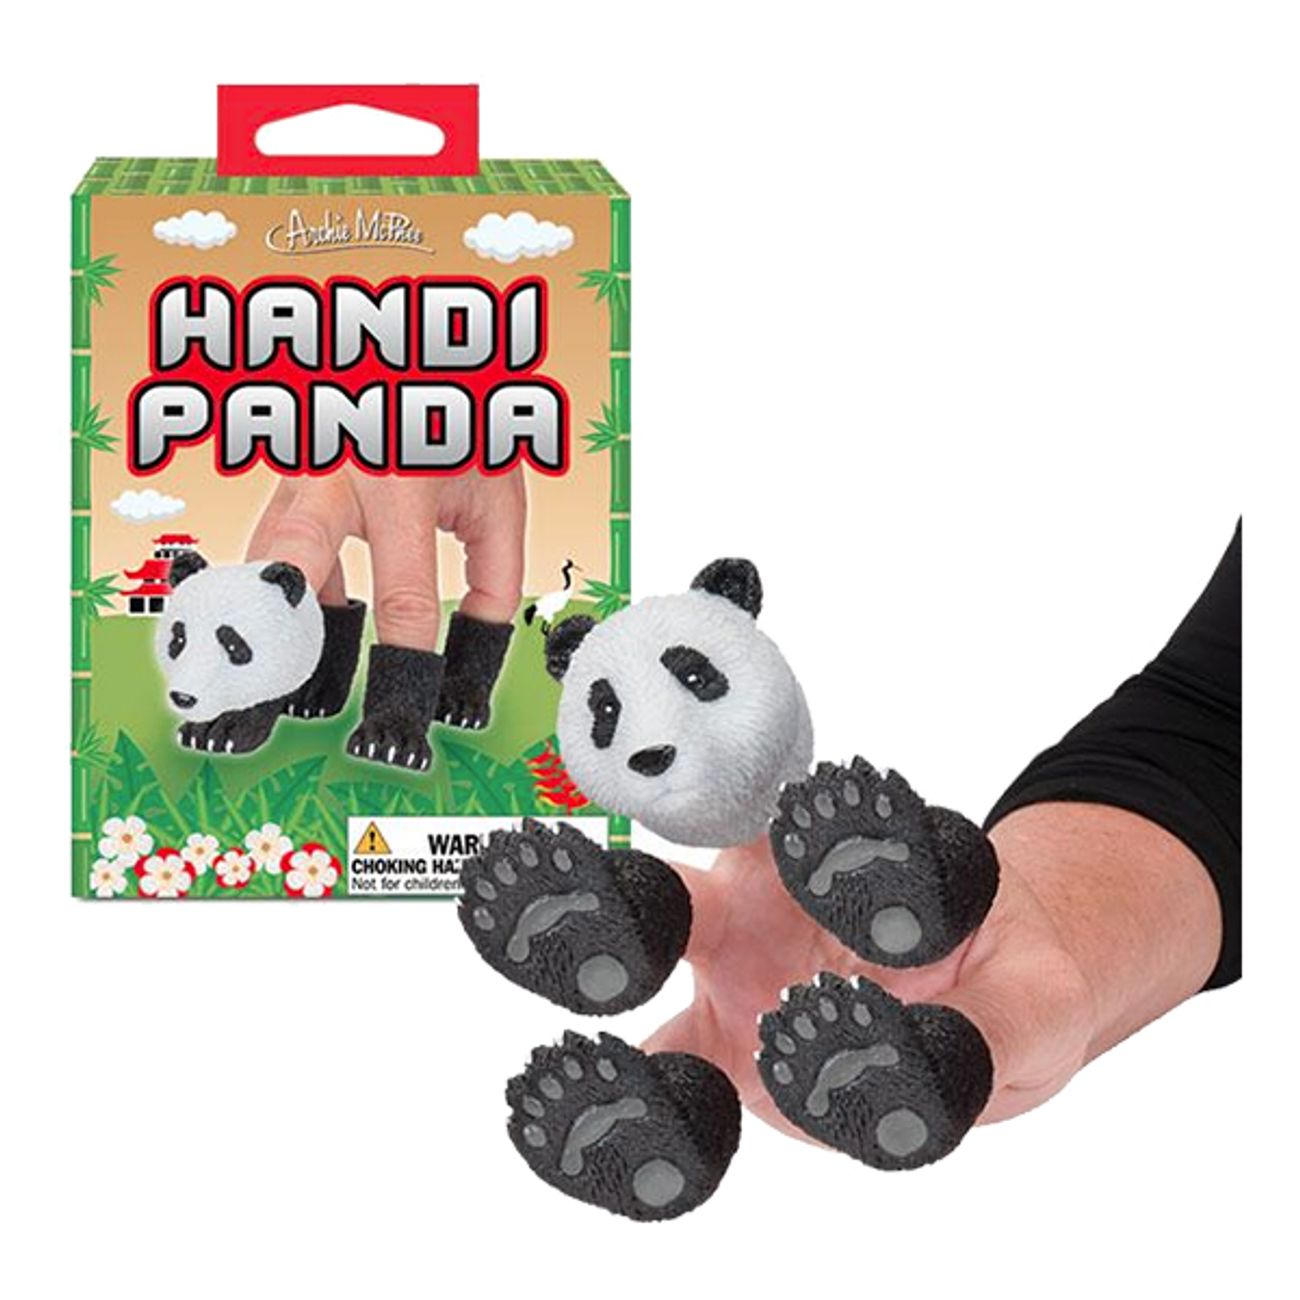 handi-panda-fingerdocka-1